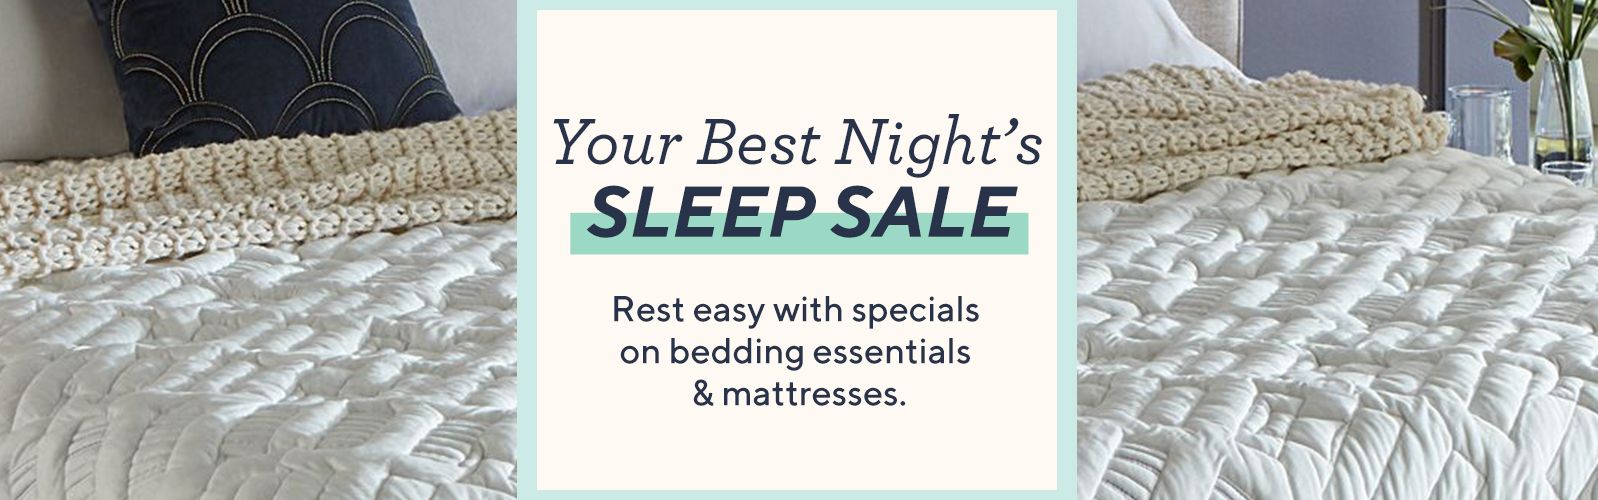 Your Best Night's Sleep Sale.  Rest easy with specials on bedding essentials & mattresses.